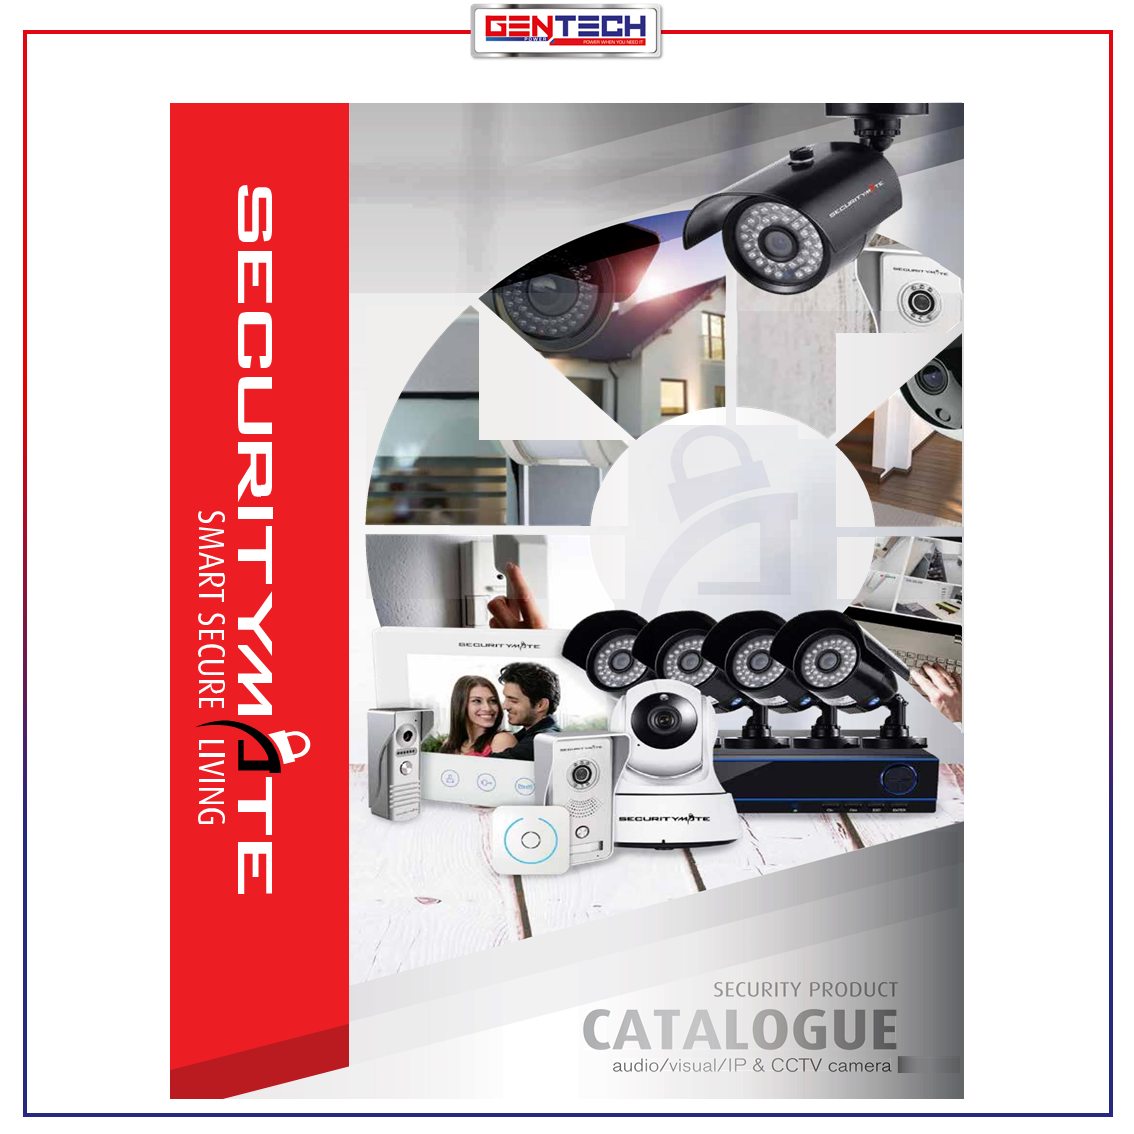 GENTECH - Securitymate catalogue Catalogue